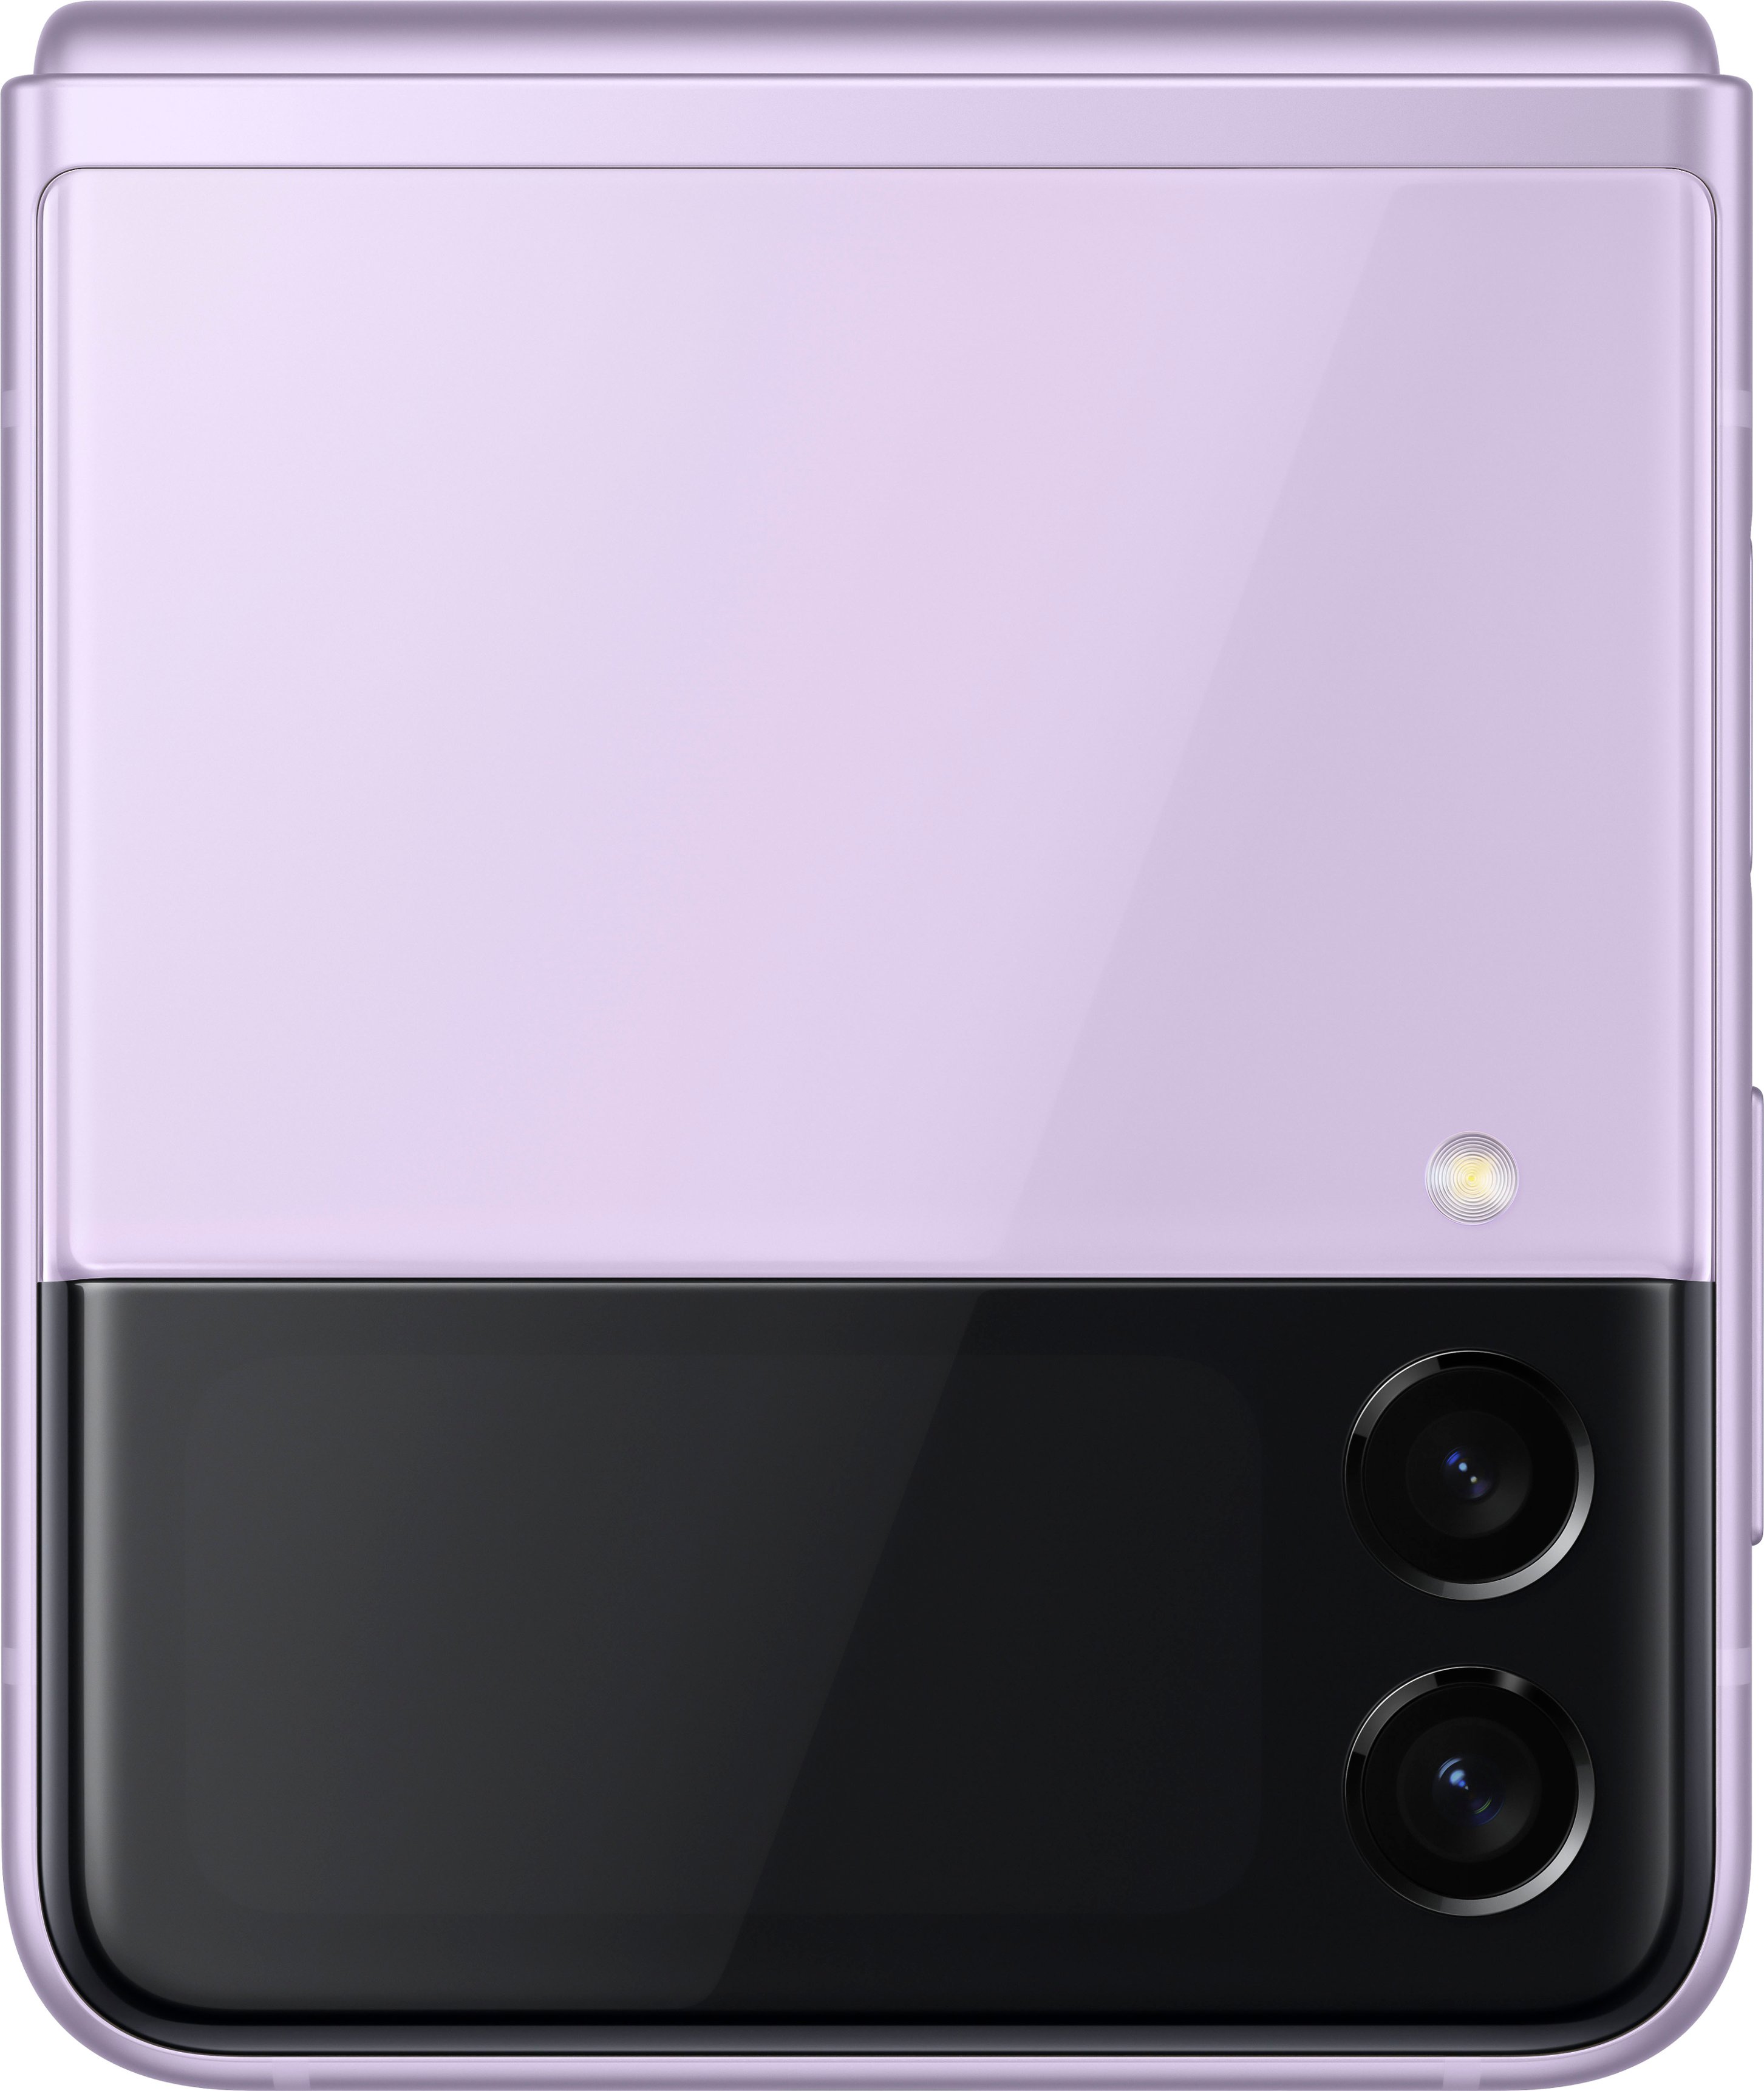 Galaxy Z Flip3 5G 256GB - Yellow + Pink - Unlocked